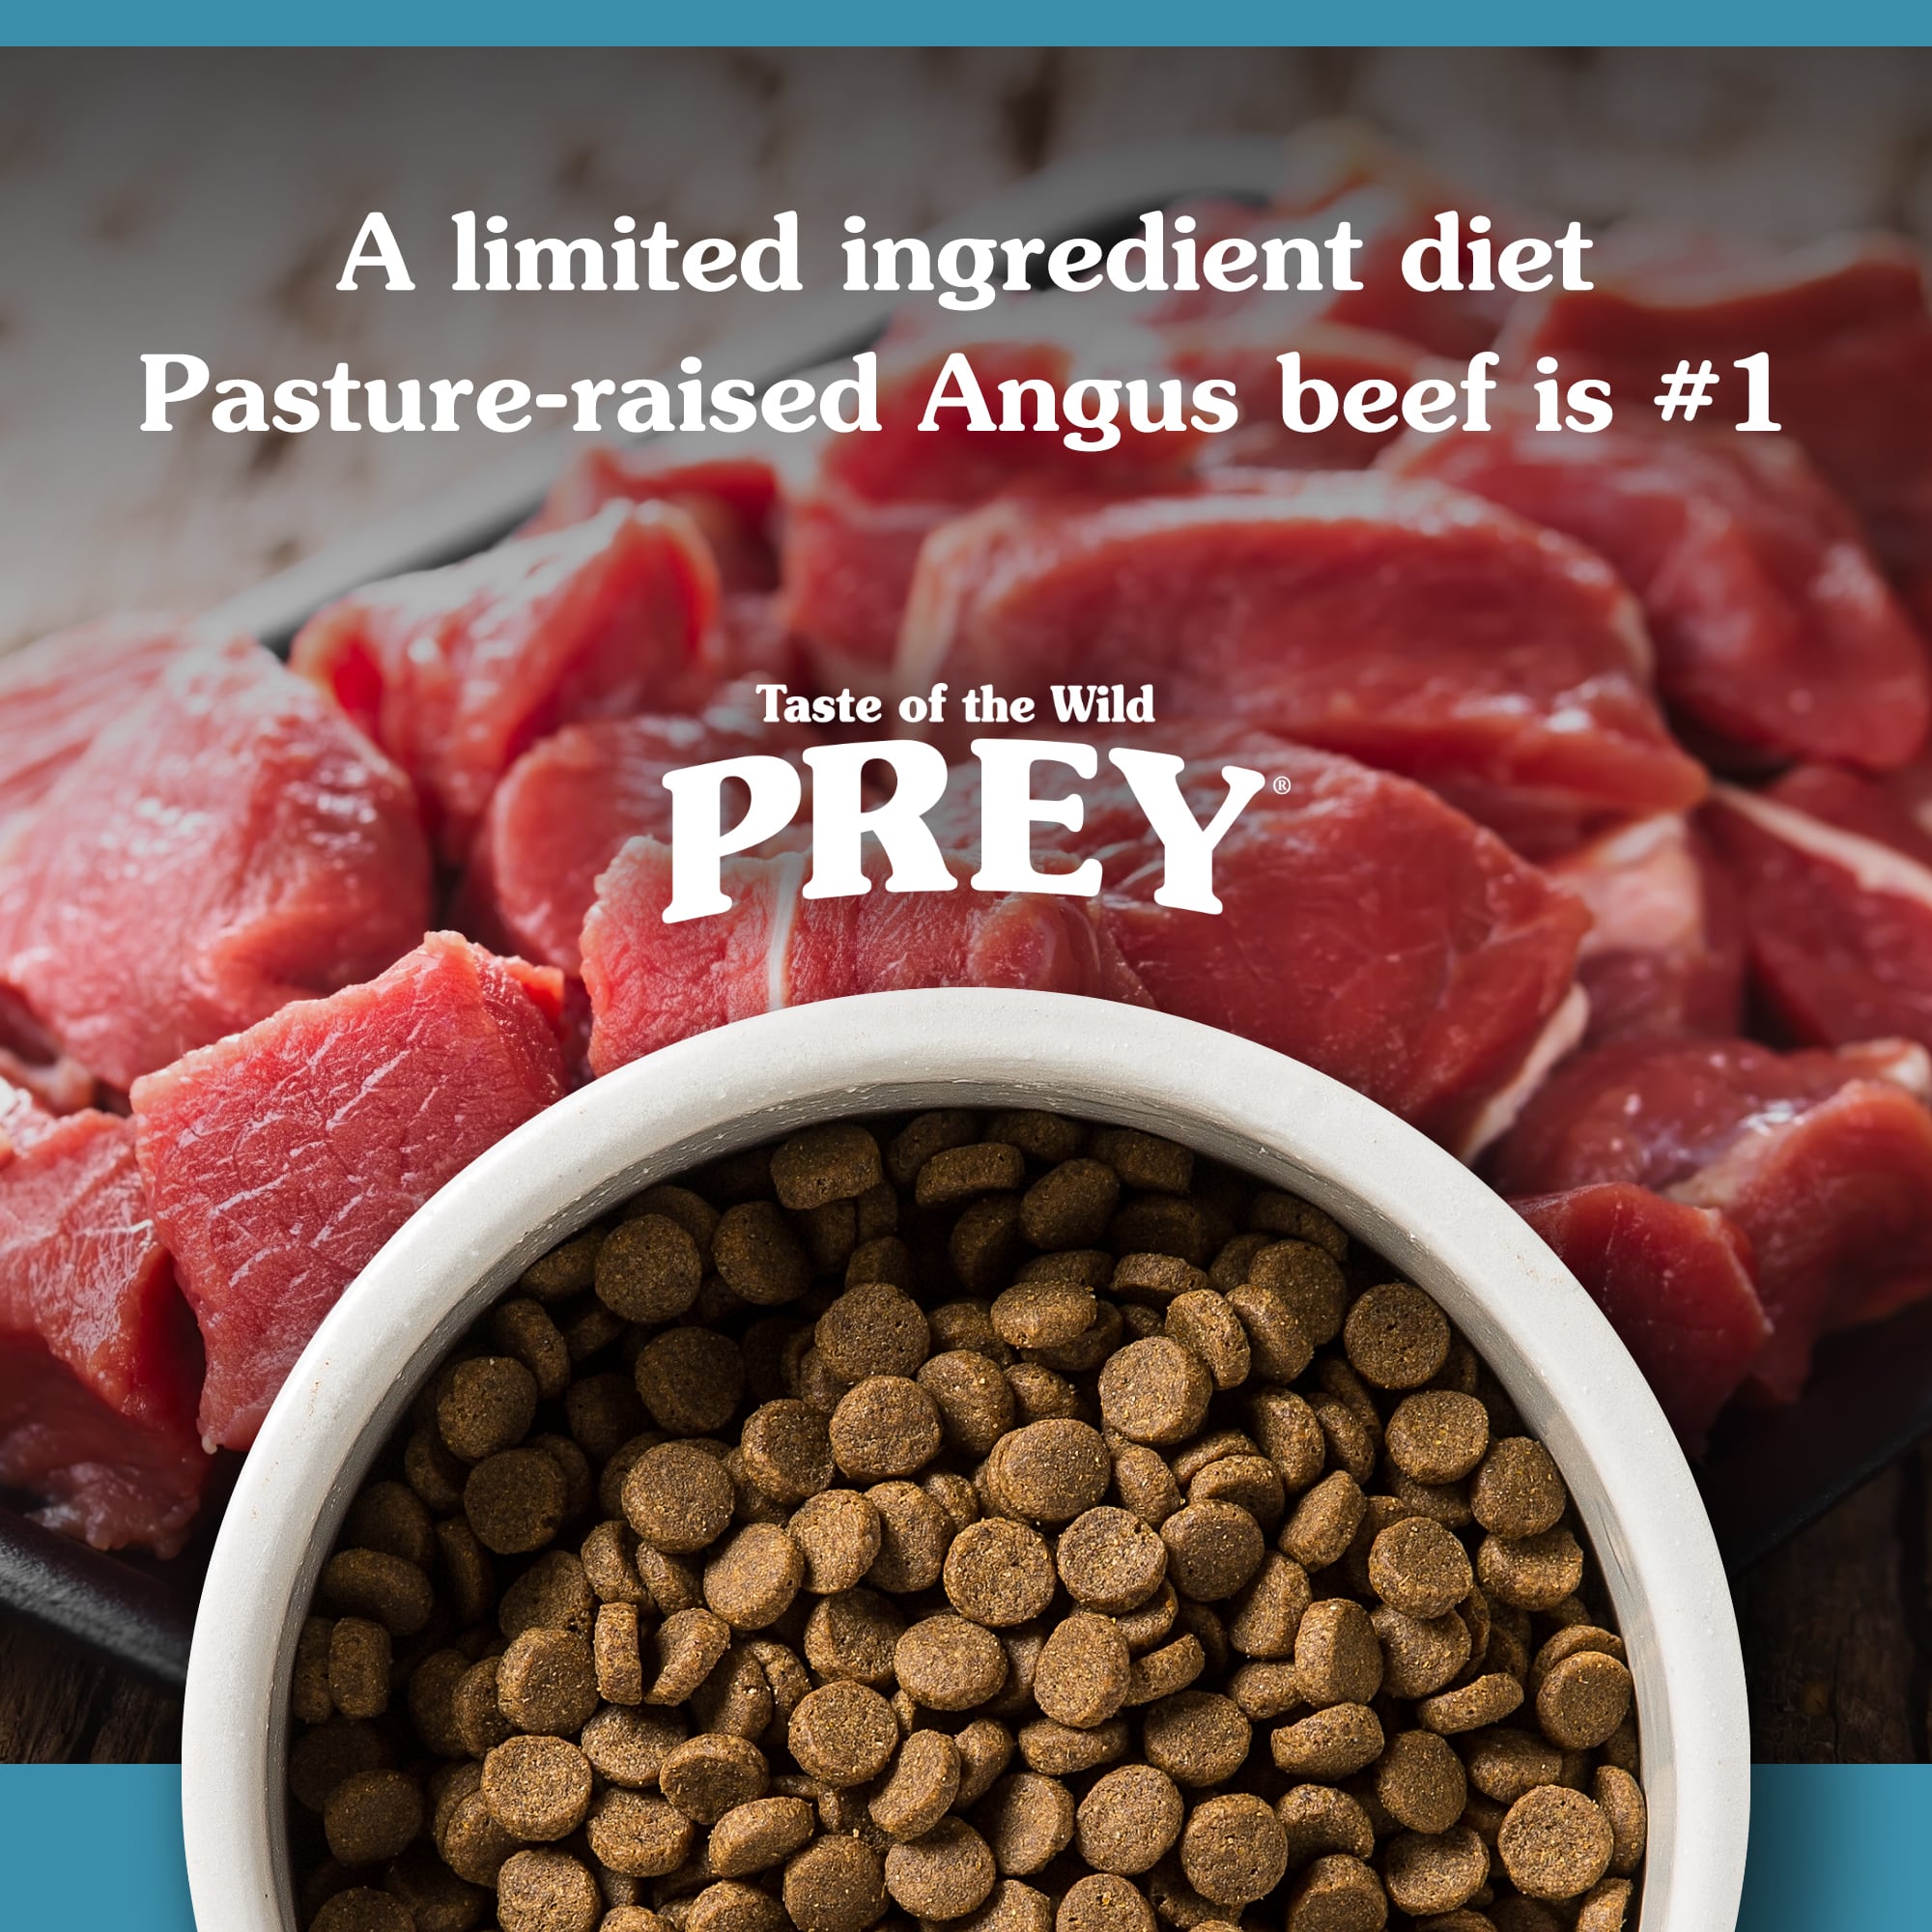 Taste Of The Wild Prey Angus Beef Formula Grain-Free Dog Food - Mutts & Co.